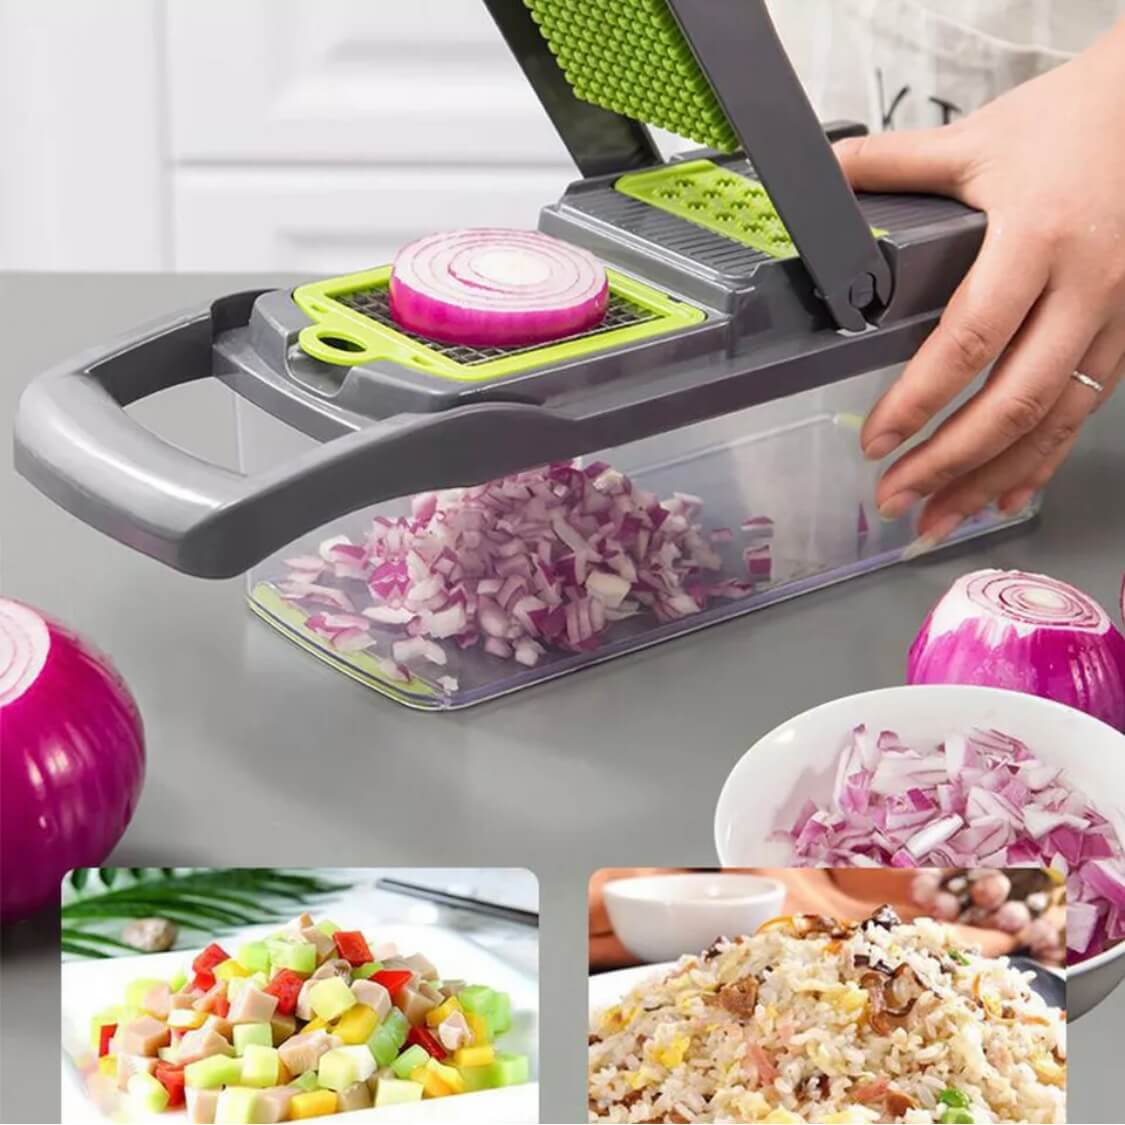 12-in-1 Food Vegetable Cutter Salad Chopper,Multifunctional Onion Fruit  Dicer Chopper Veggie Slicer Kitchen Tool